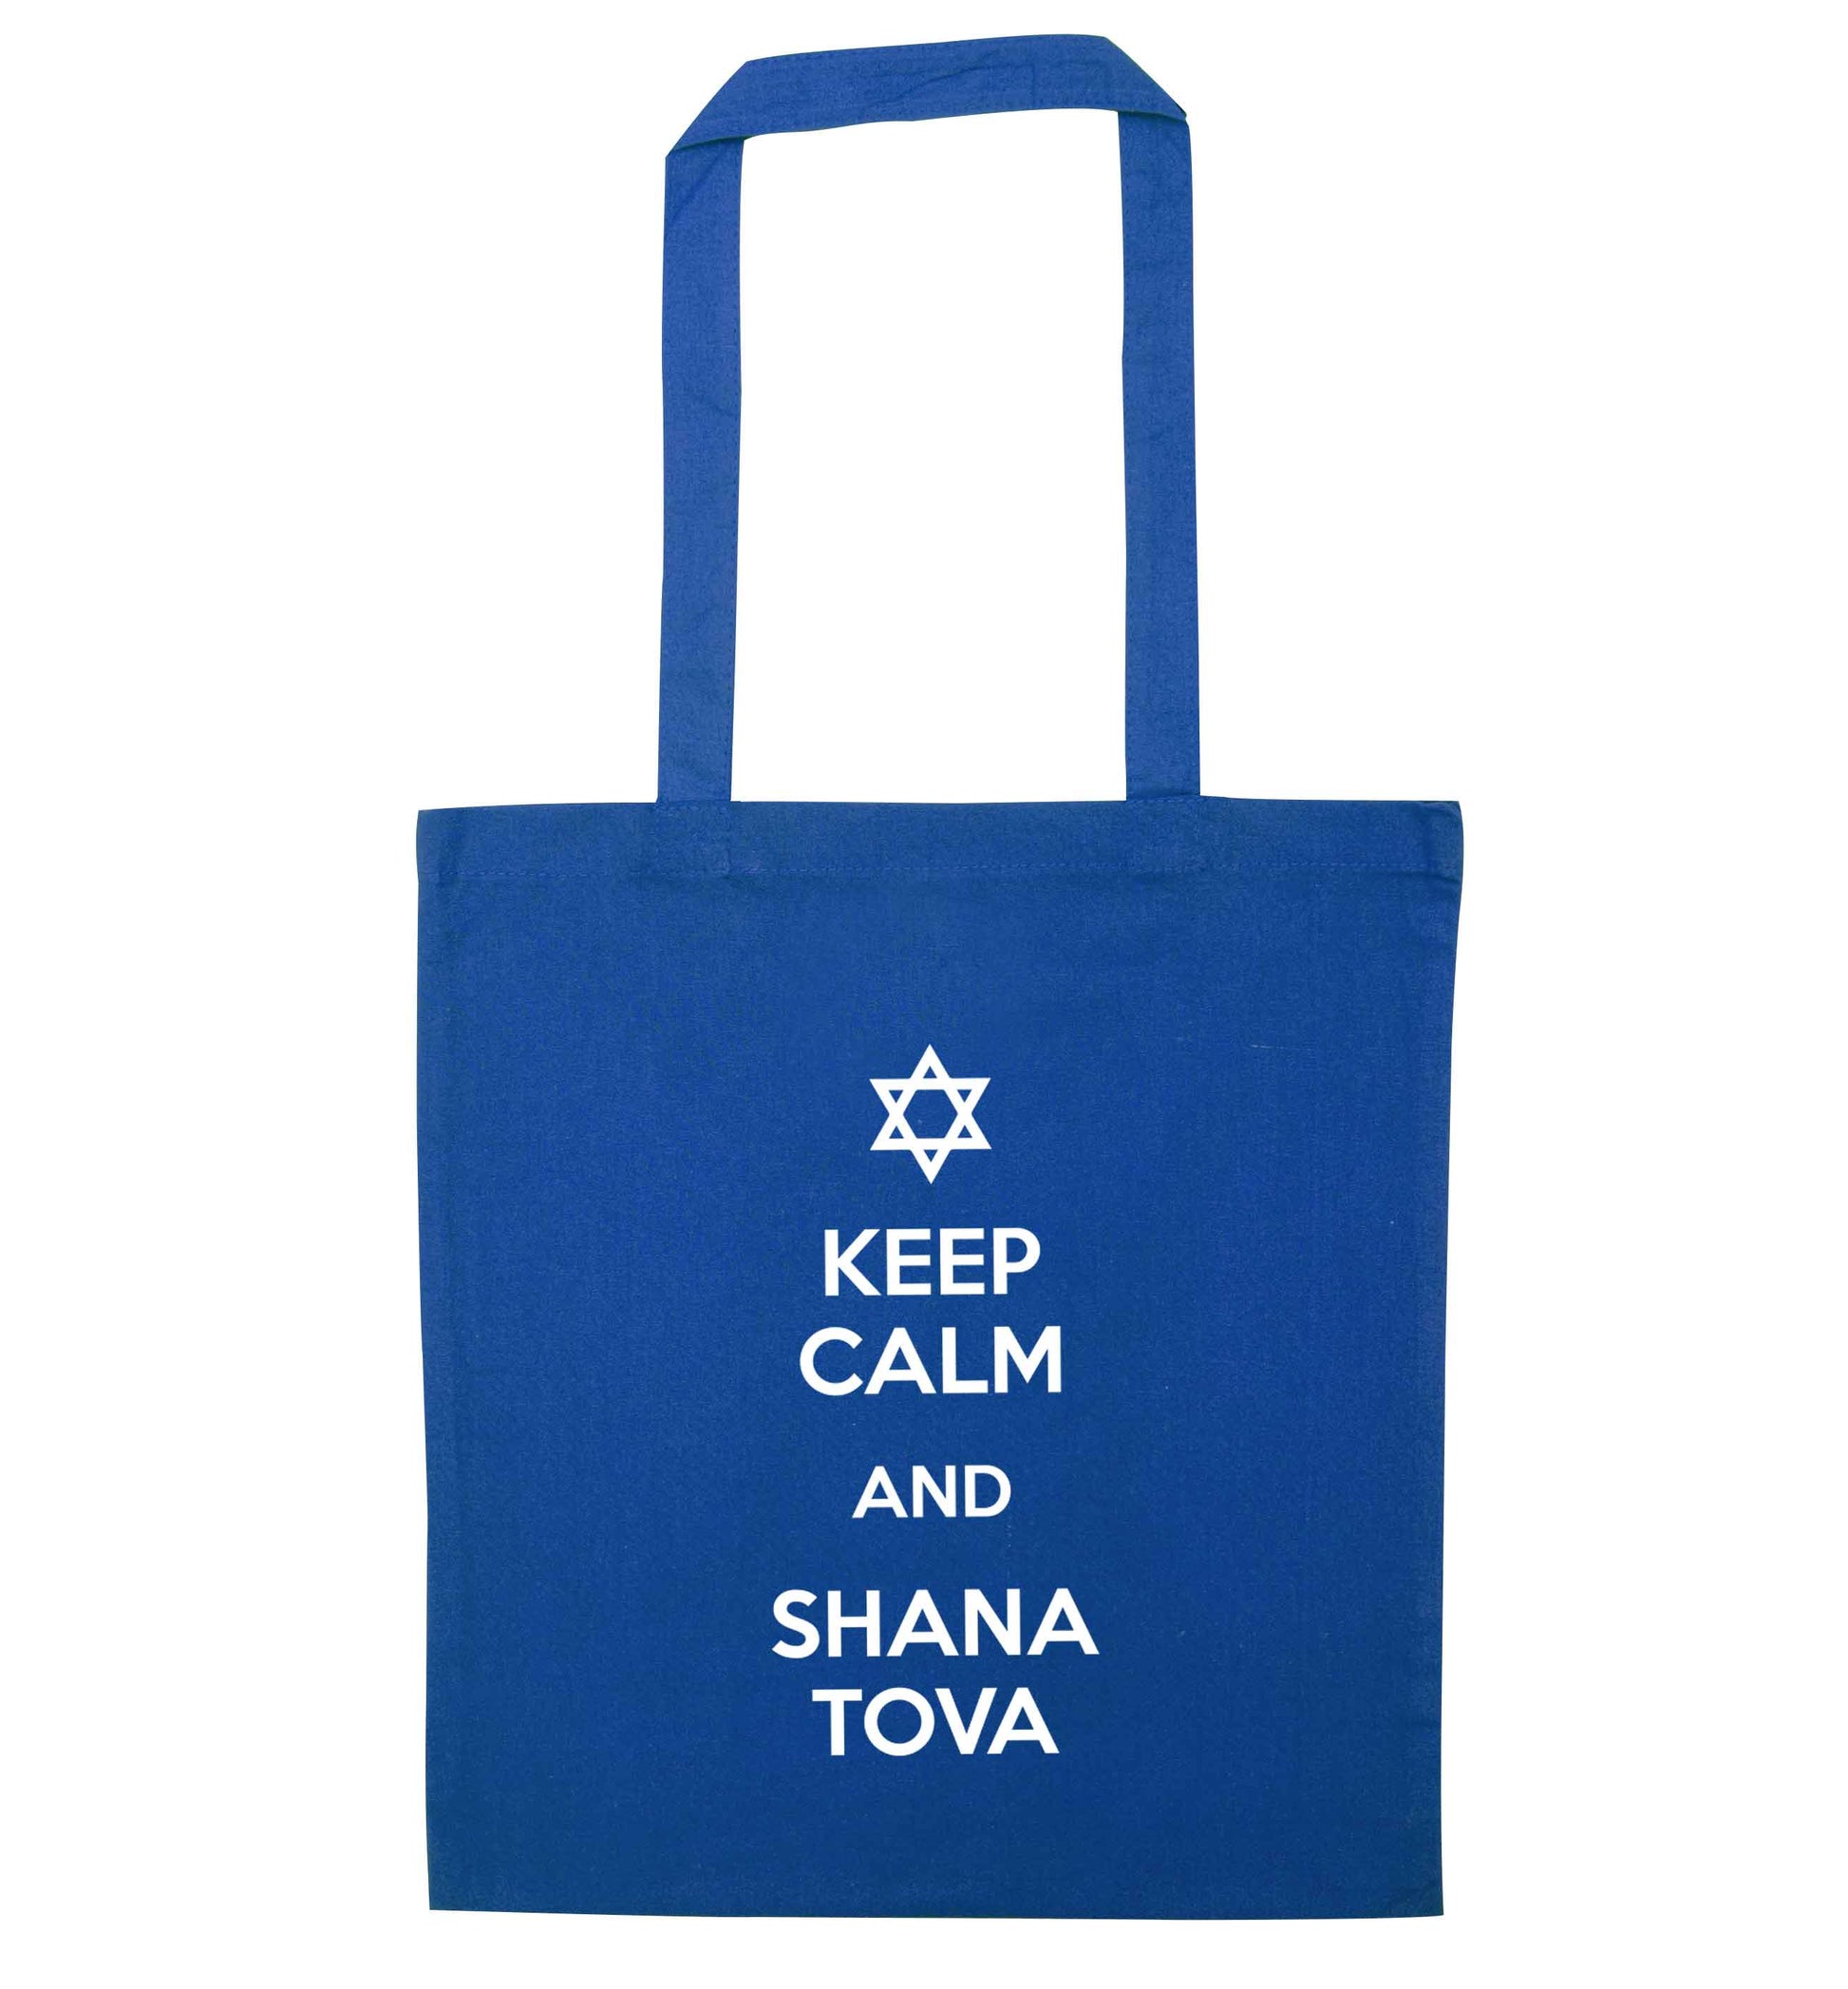 Keep calm and shana tova blue tote bag